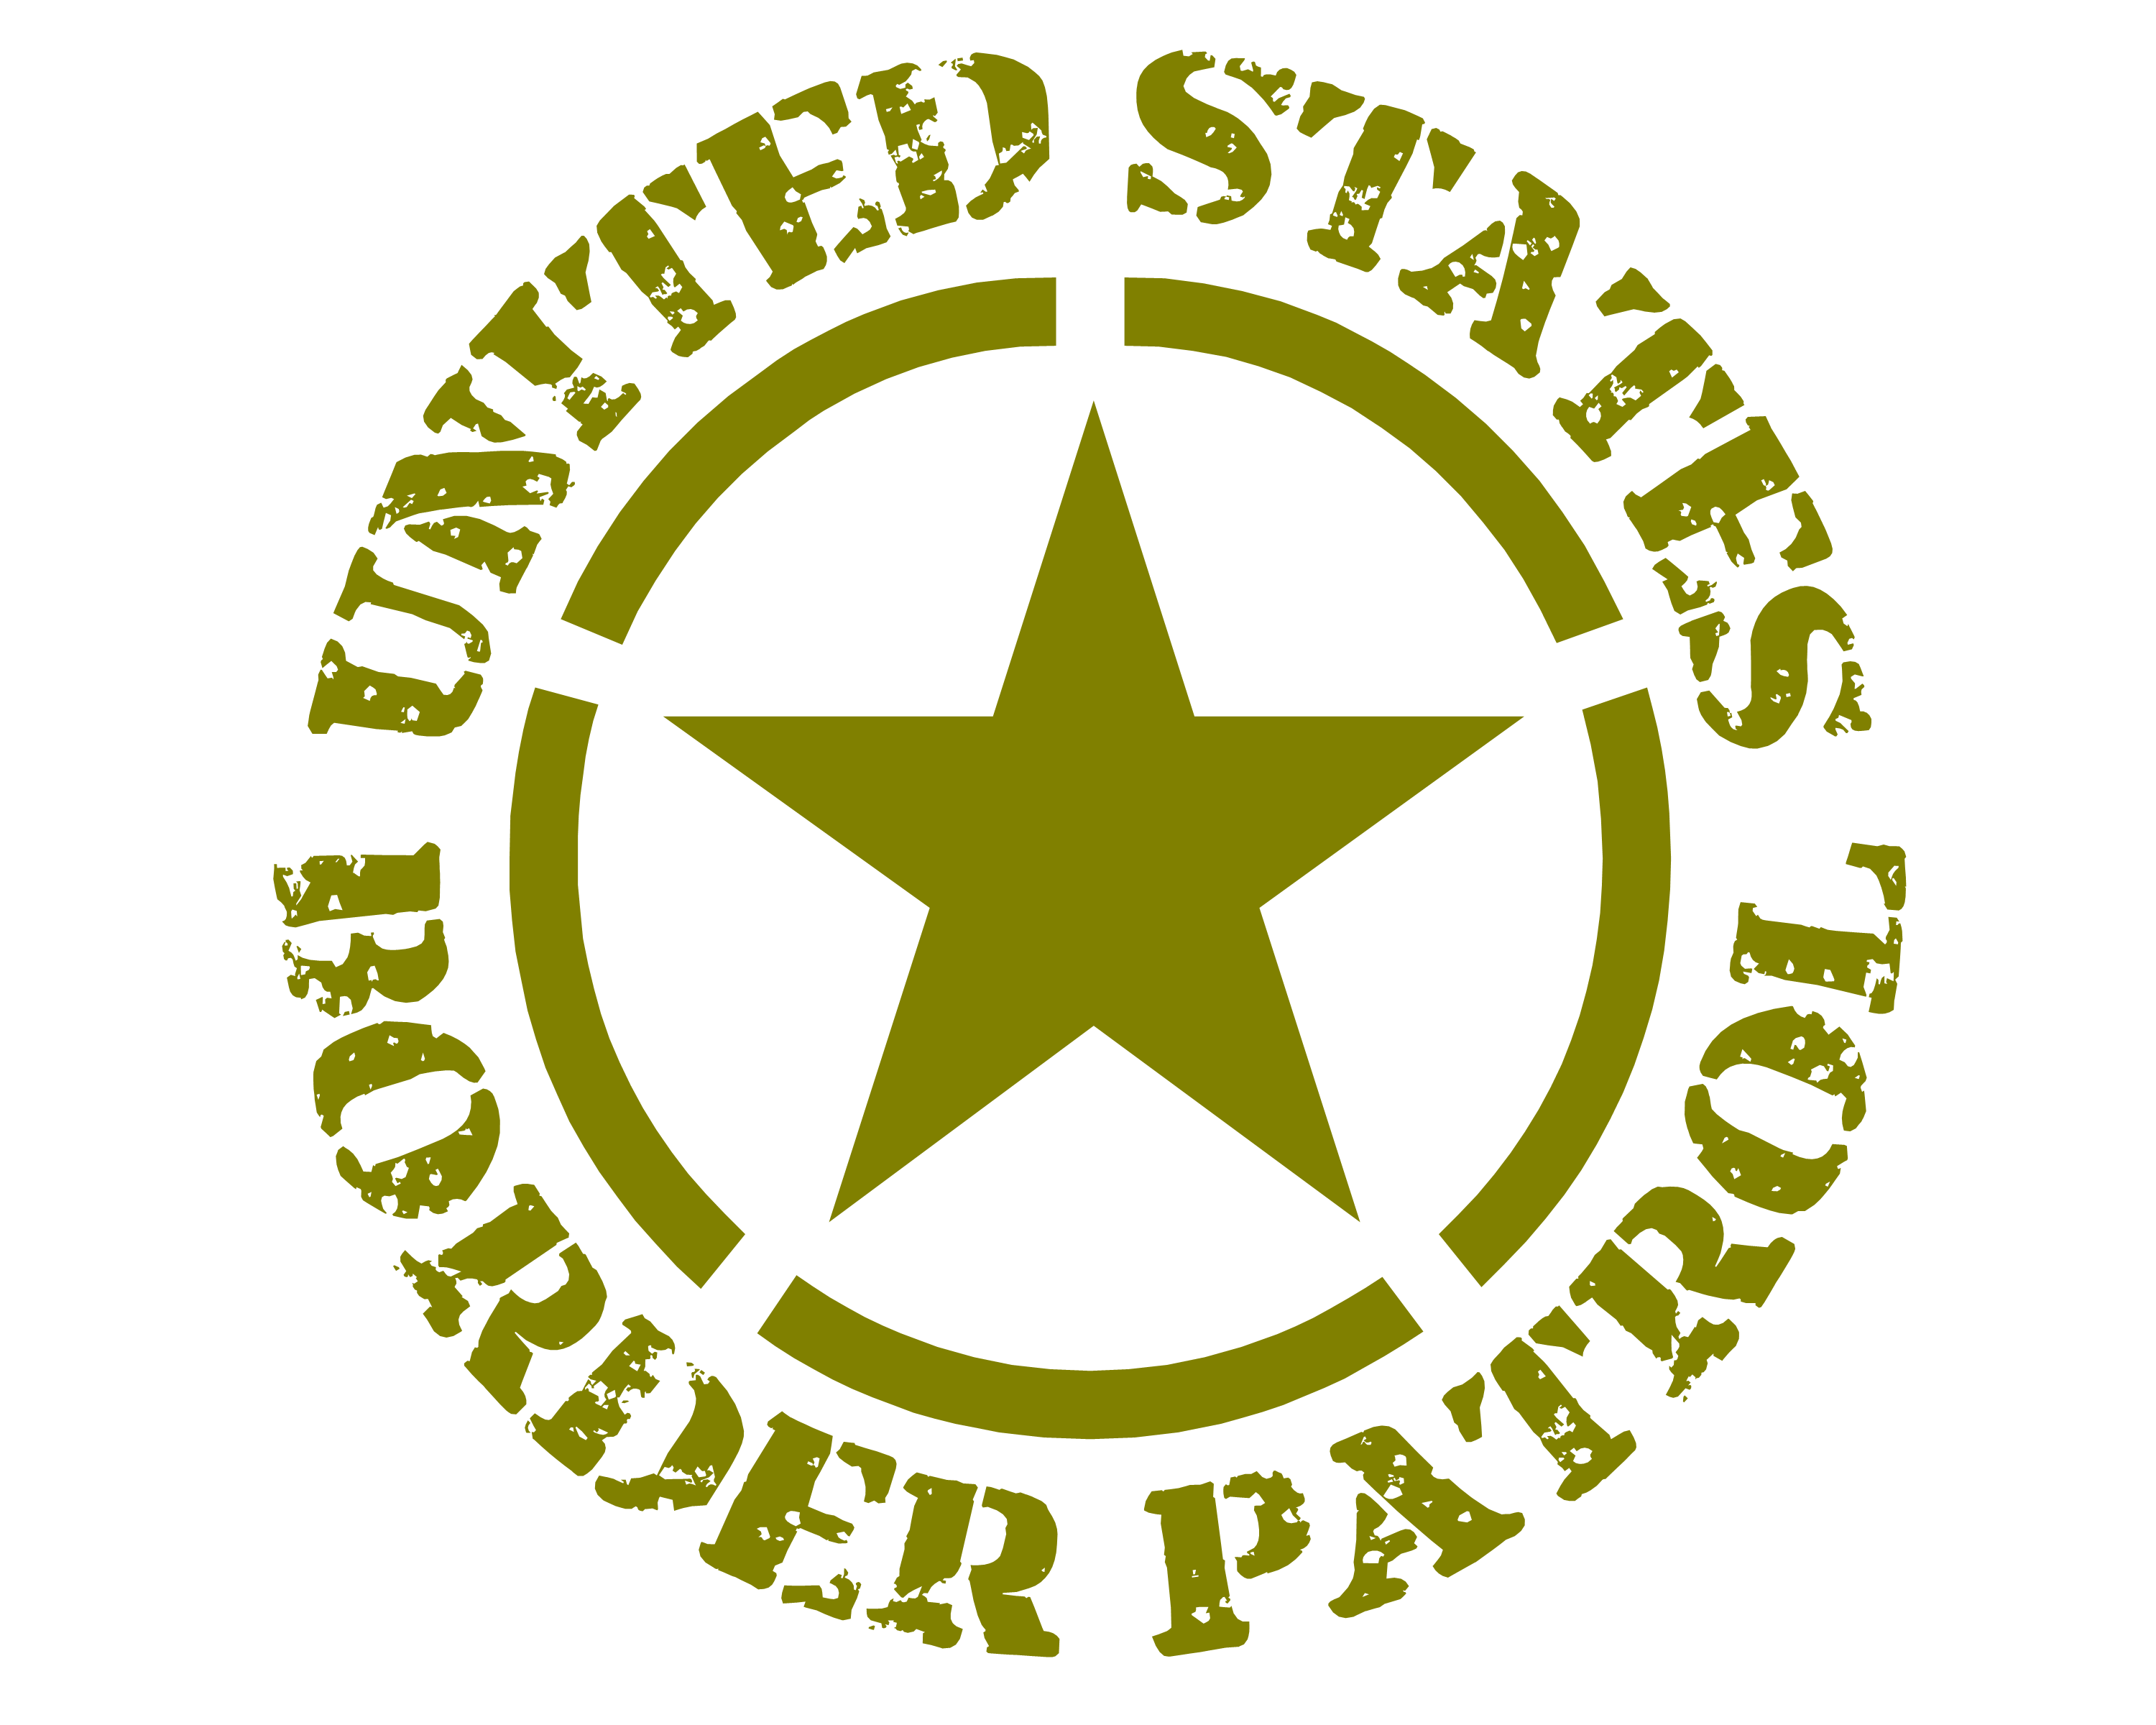 Download Border patrol Logos